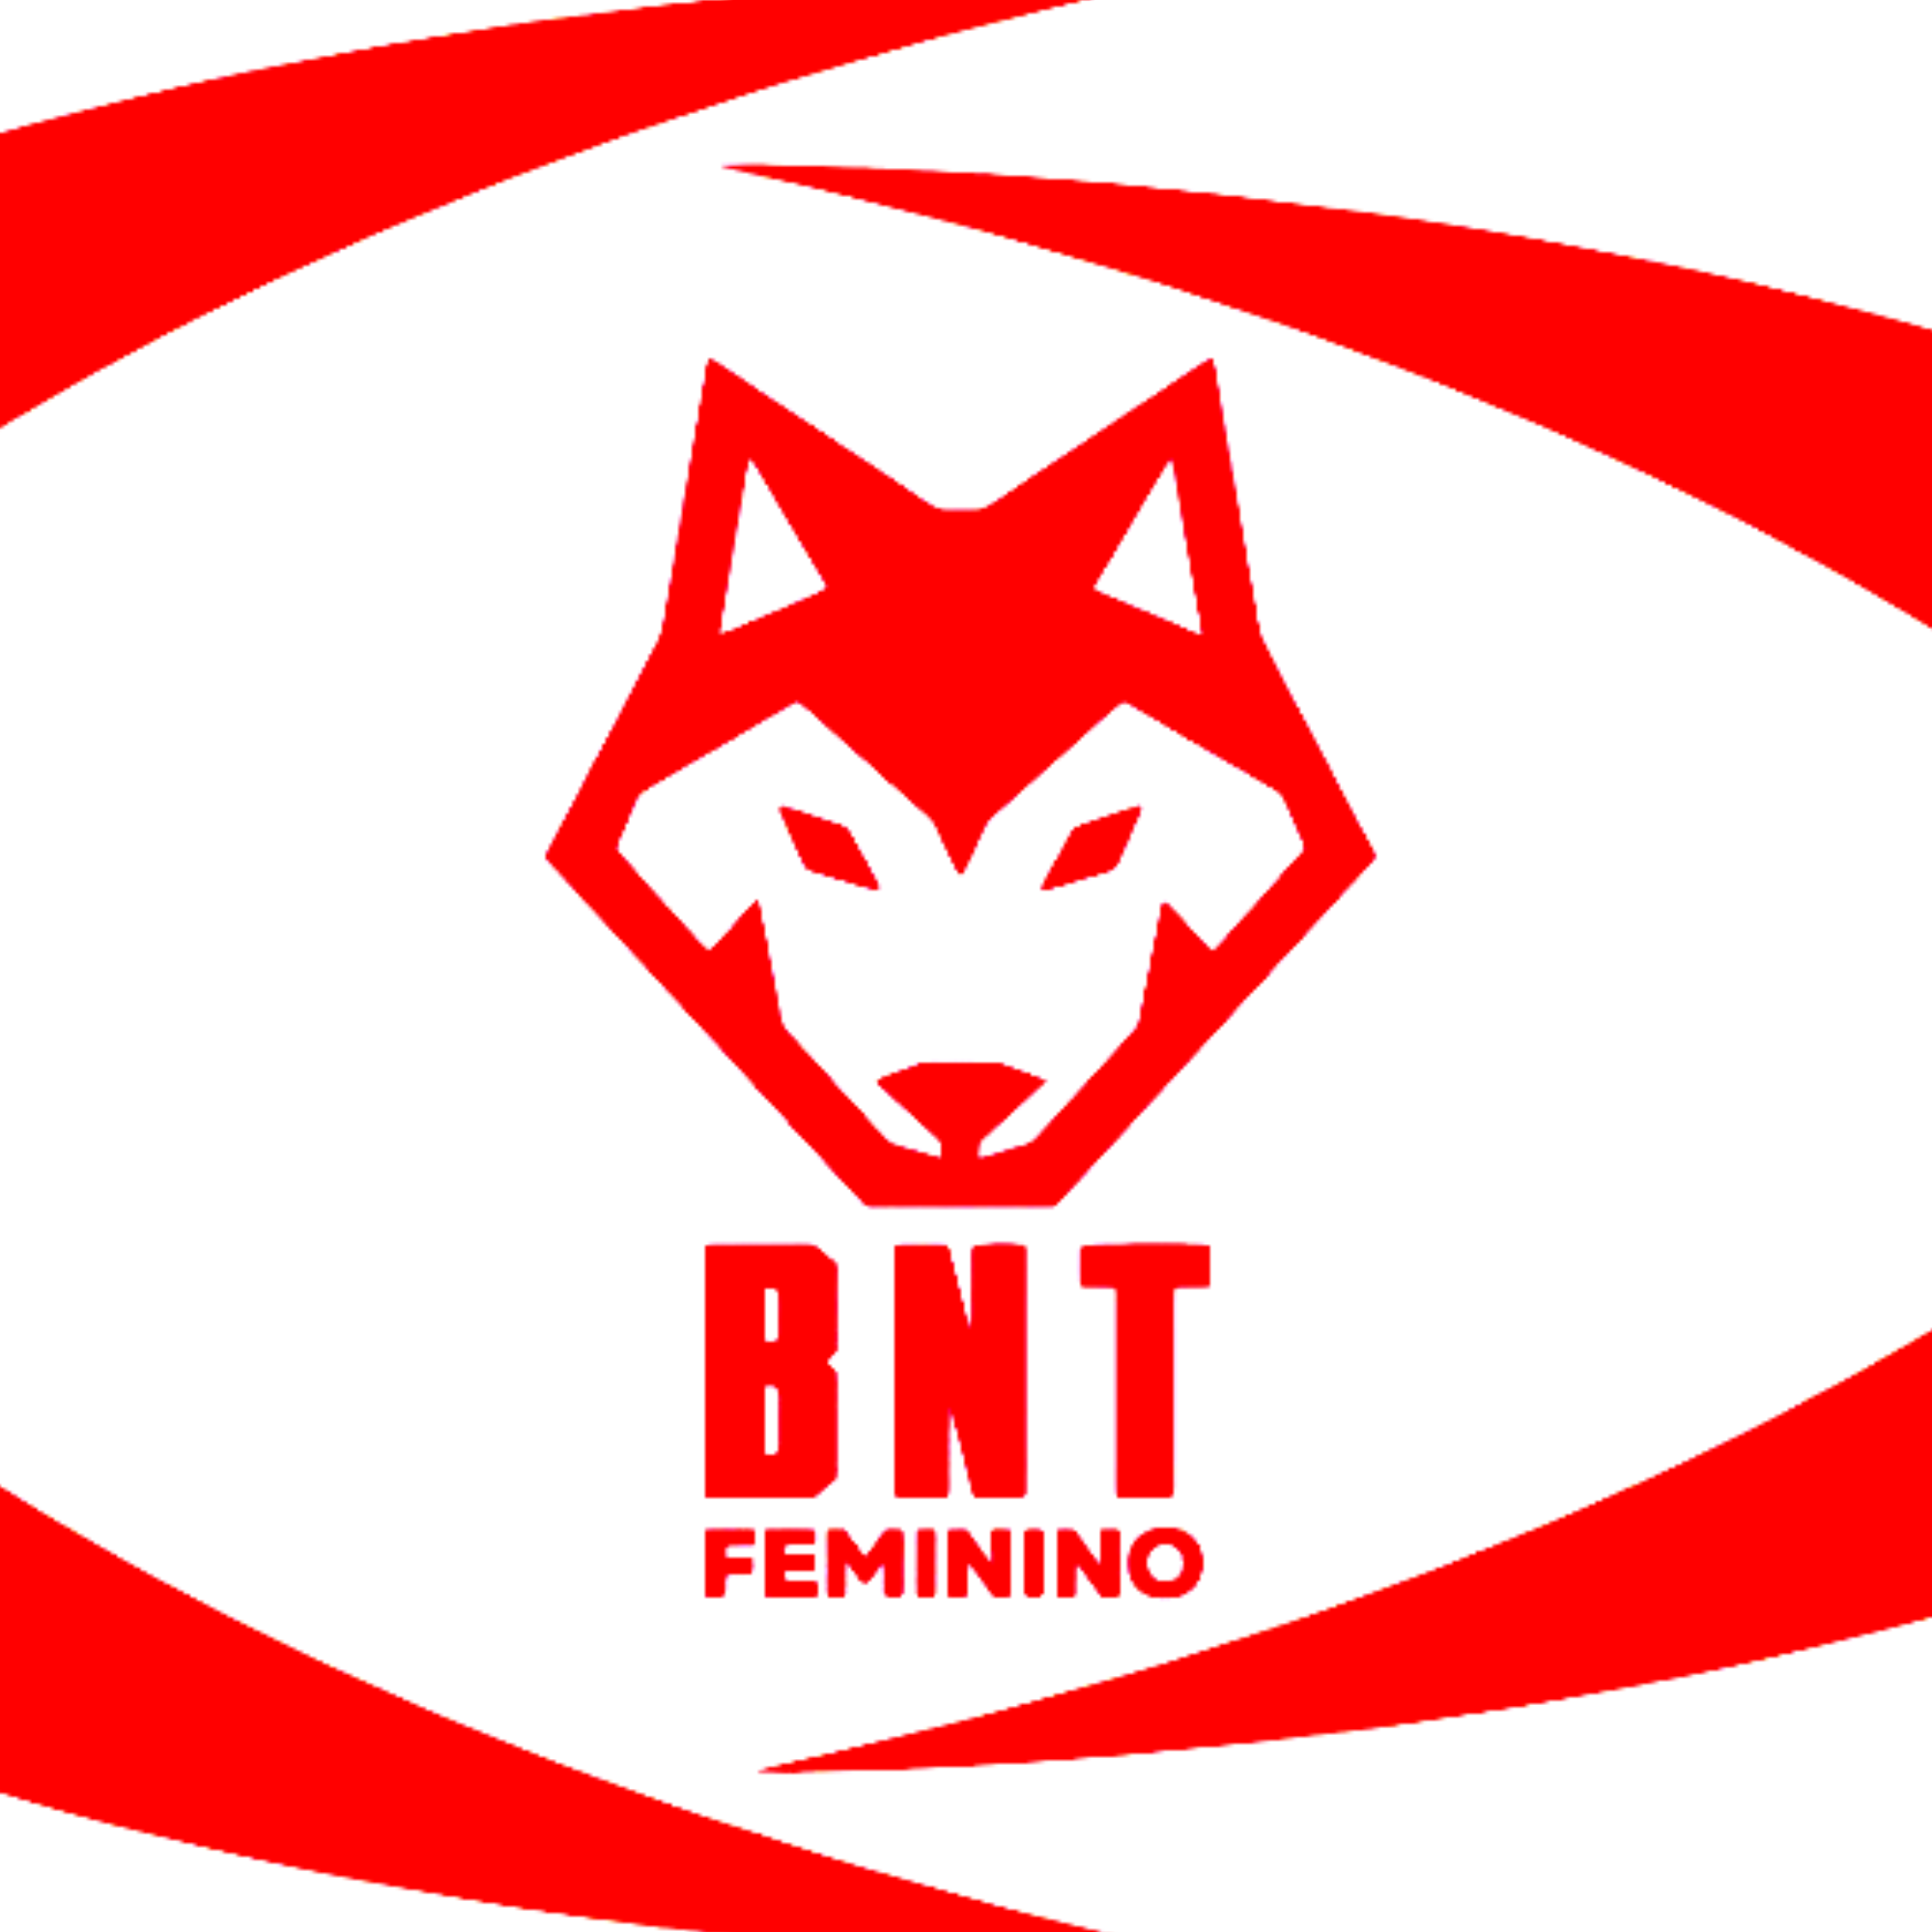 BNT team logo